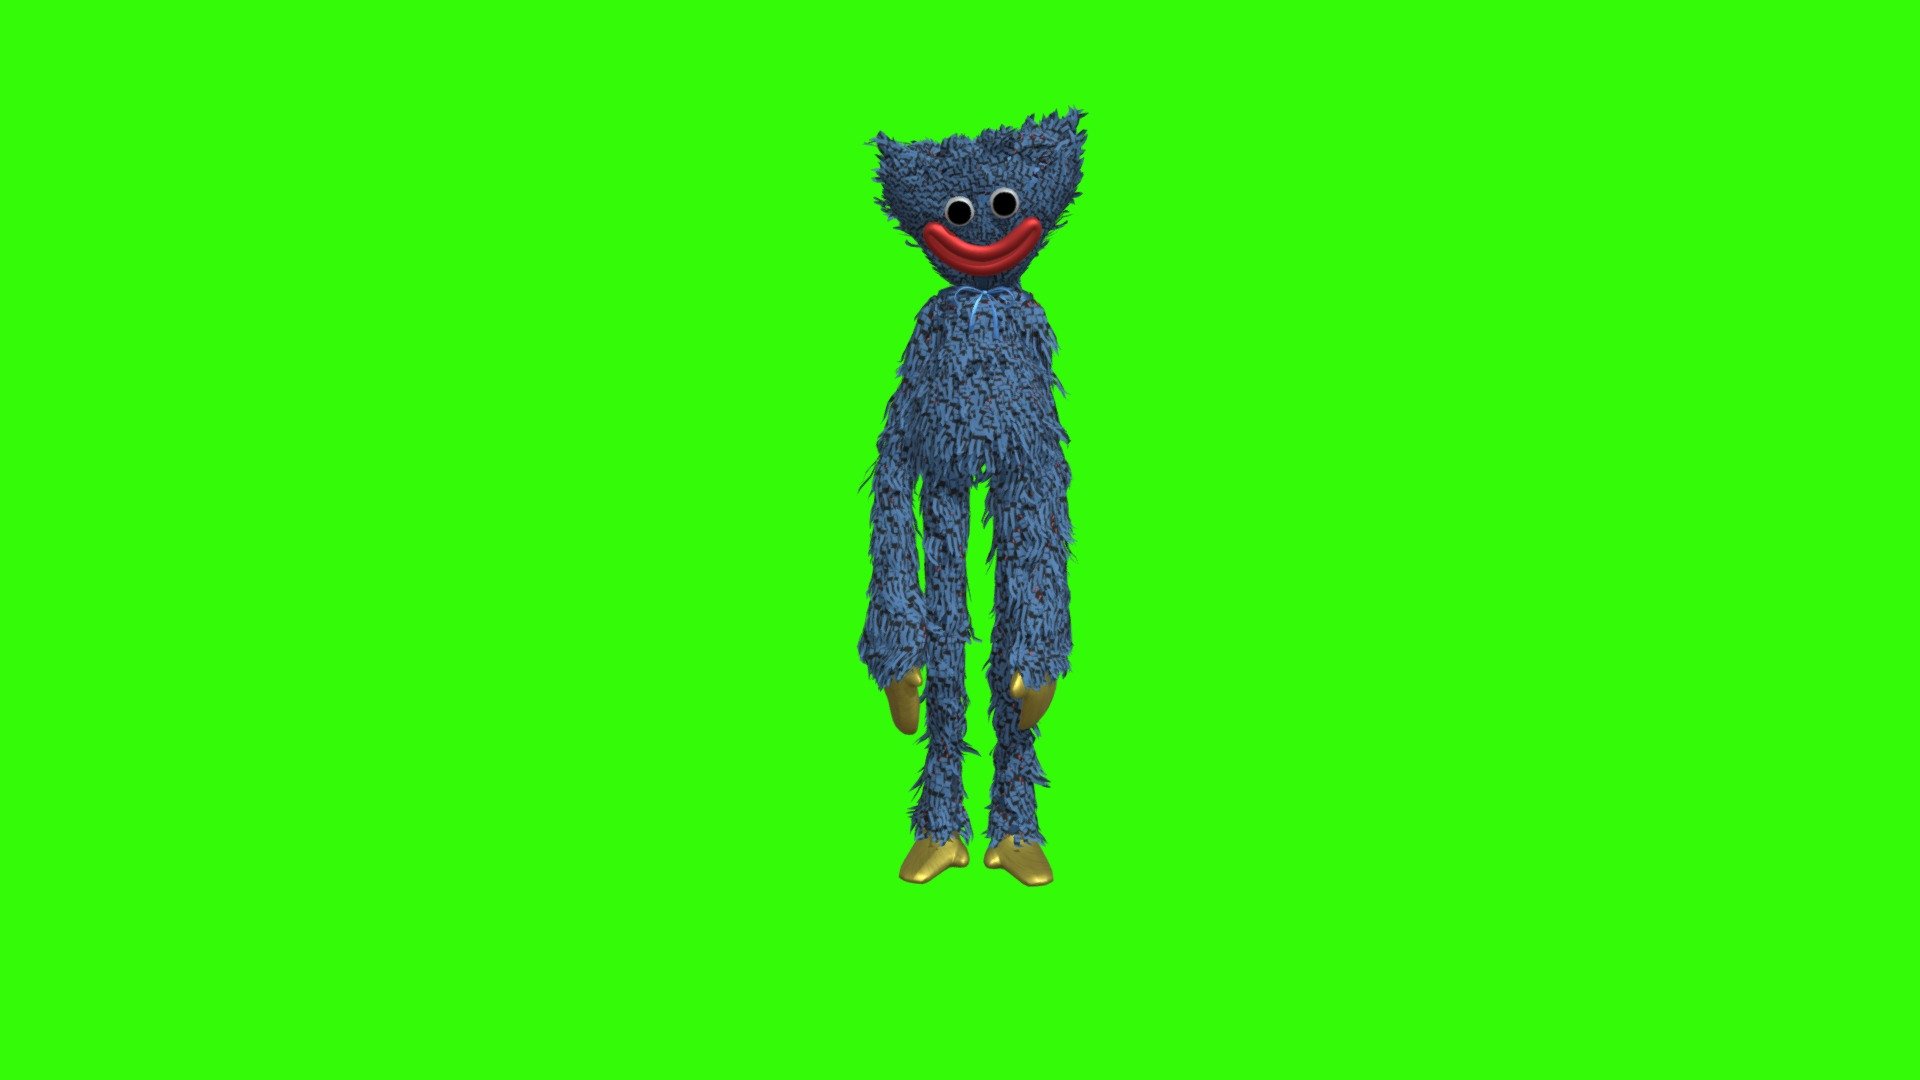 Siren Head vs. Huggy Wuggy [Huggy Wuggy] - Download Free 3D model by Horror BigGameRR Green Screens (@HorrorBigGameRR) 3d model